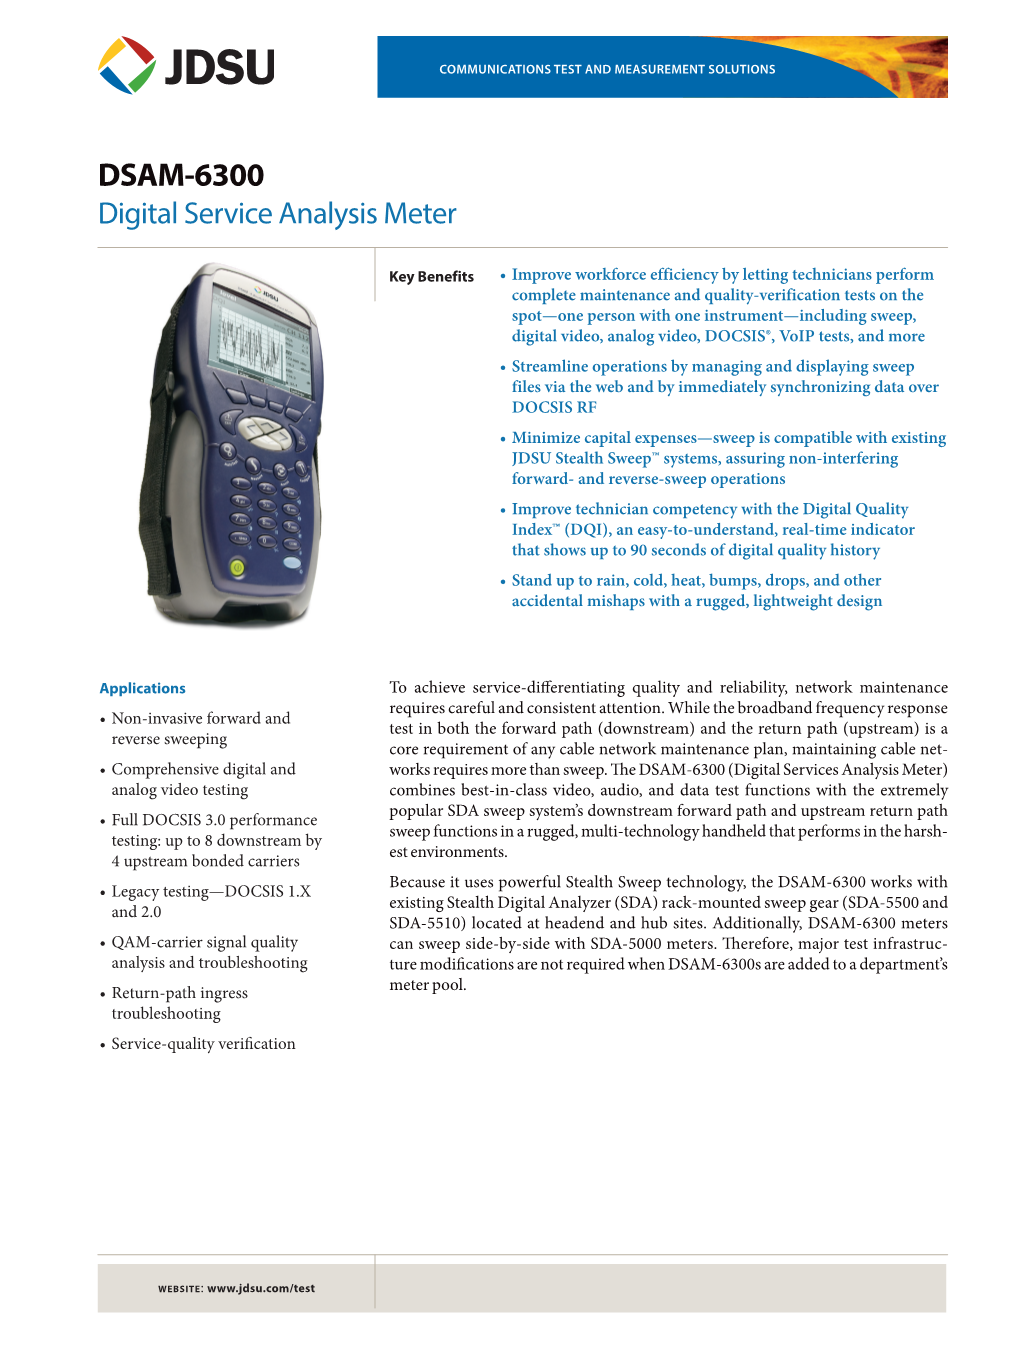 DSAM-6300 Digital Service Analysis Meter